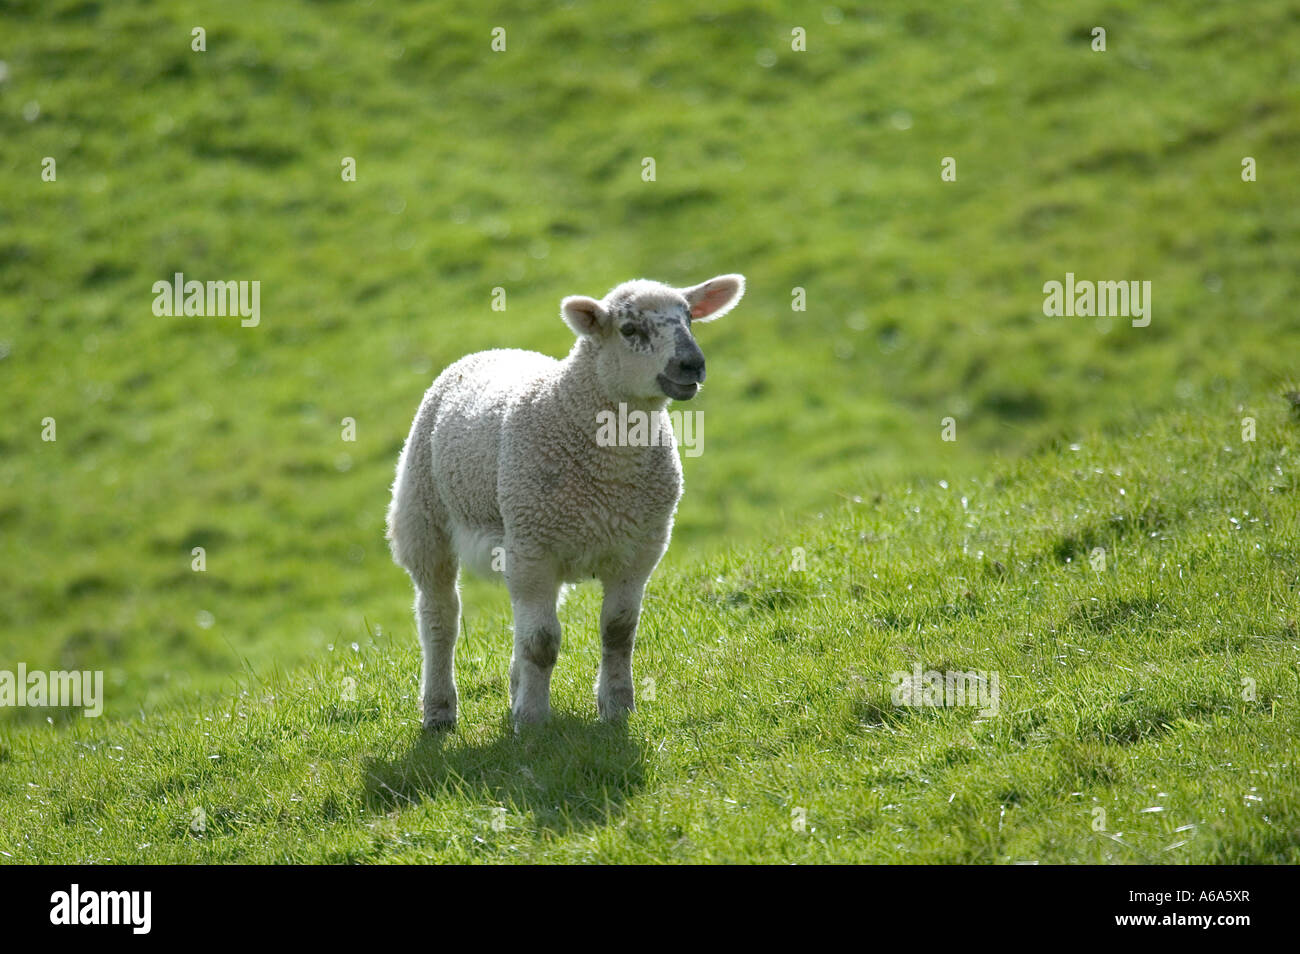 Lamb on a bright green grass hillside Stock Photo